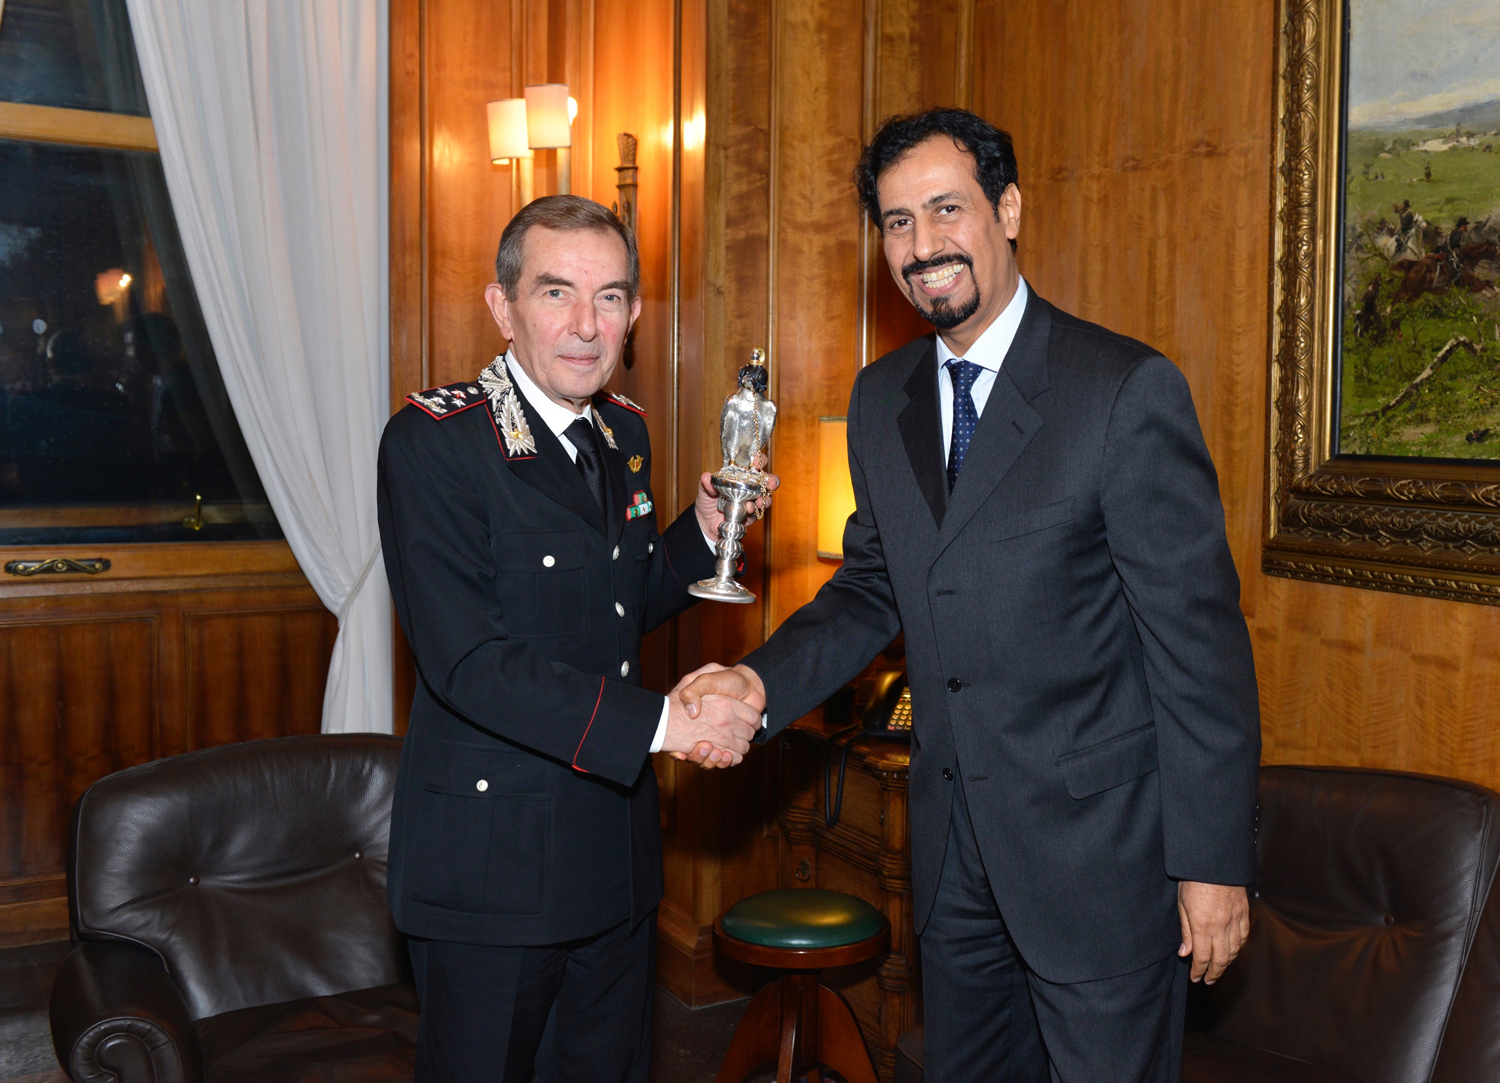 Ambassador to Italy Sheikh Ali Khalid Al-Jaber Al-Sabah with commander of the Carabinieri (the national military police of Italy) Gen. Leonardo Gallitelli